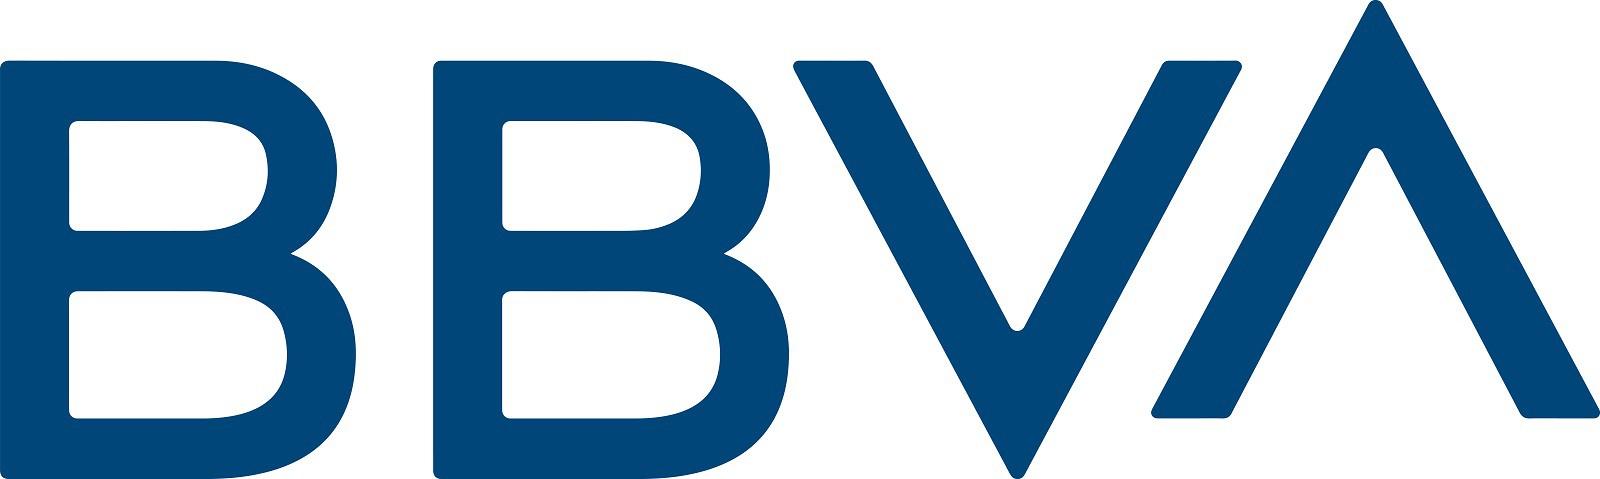 bbva new logo